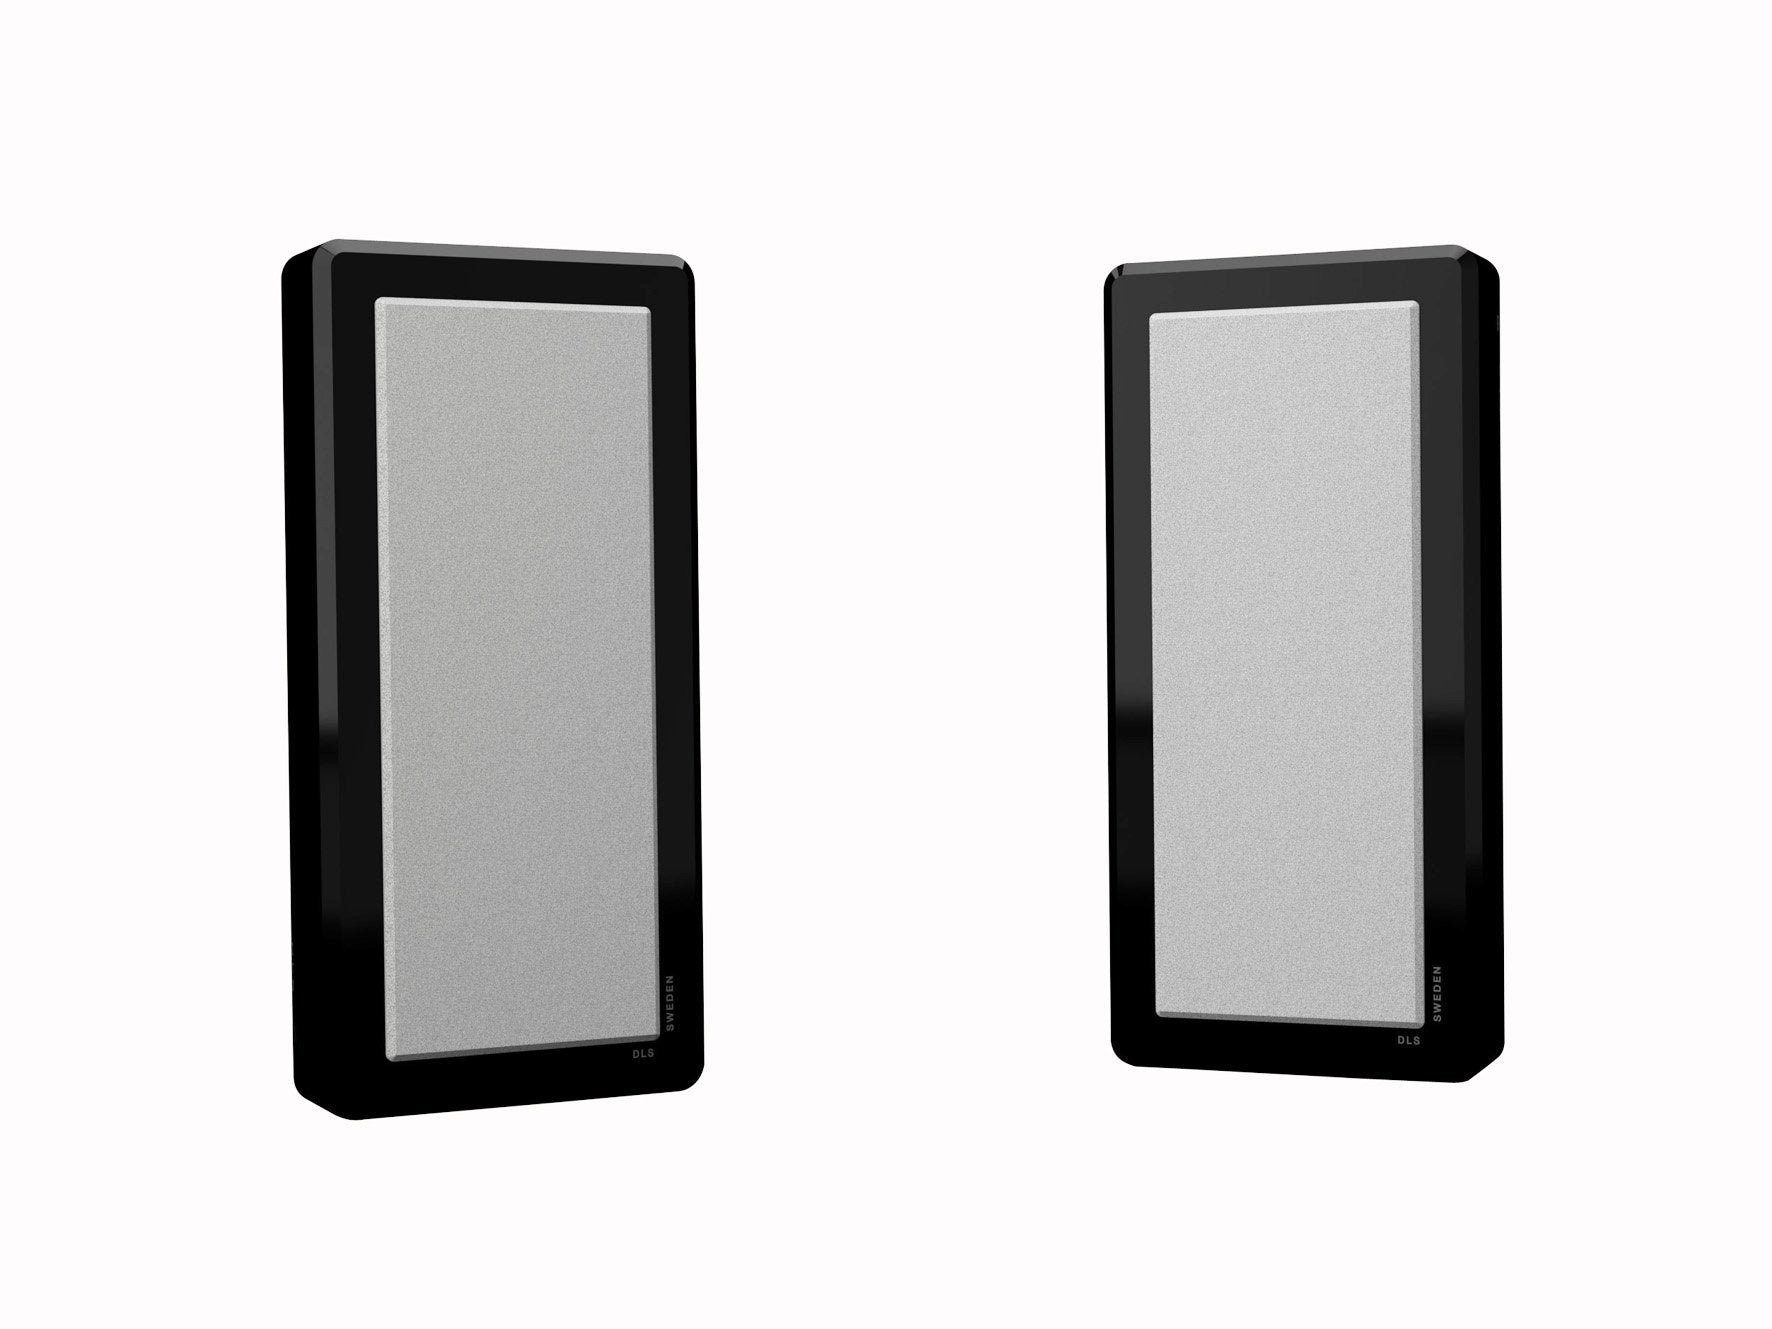 DLS Flatbox M-One On-wall speaker - Pair - Auratech LLC